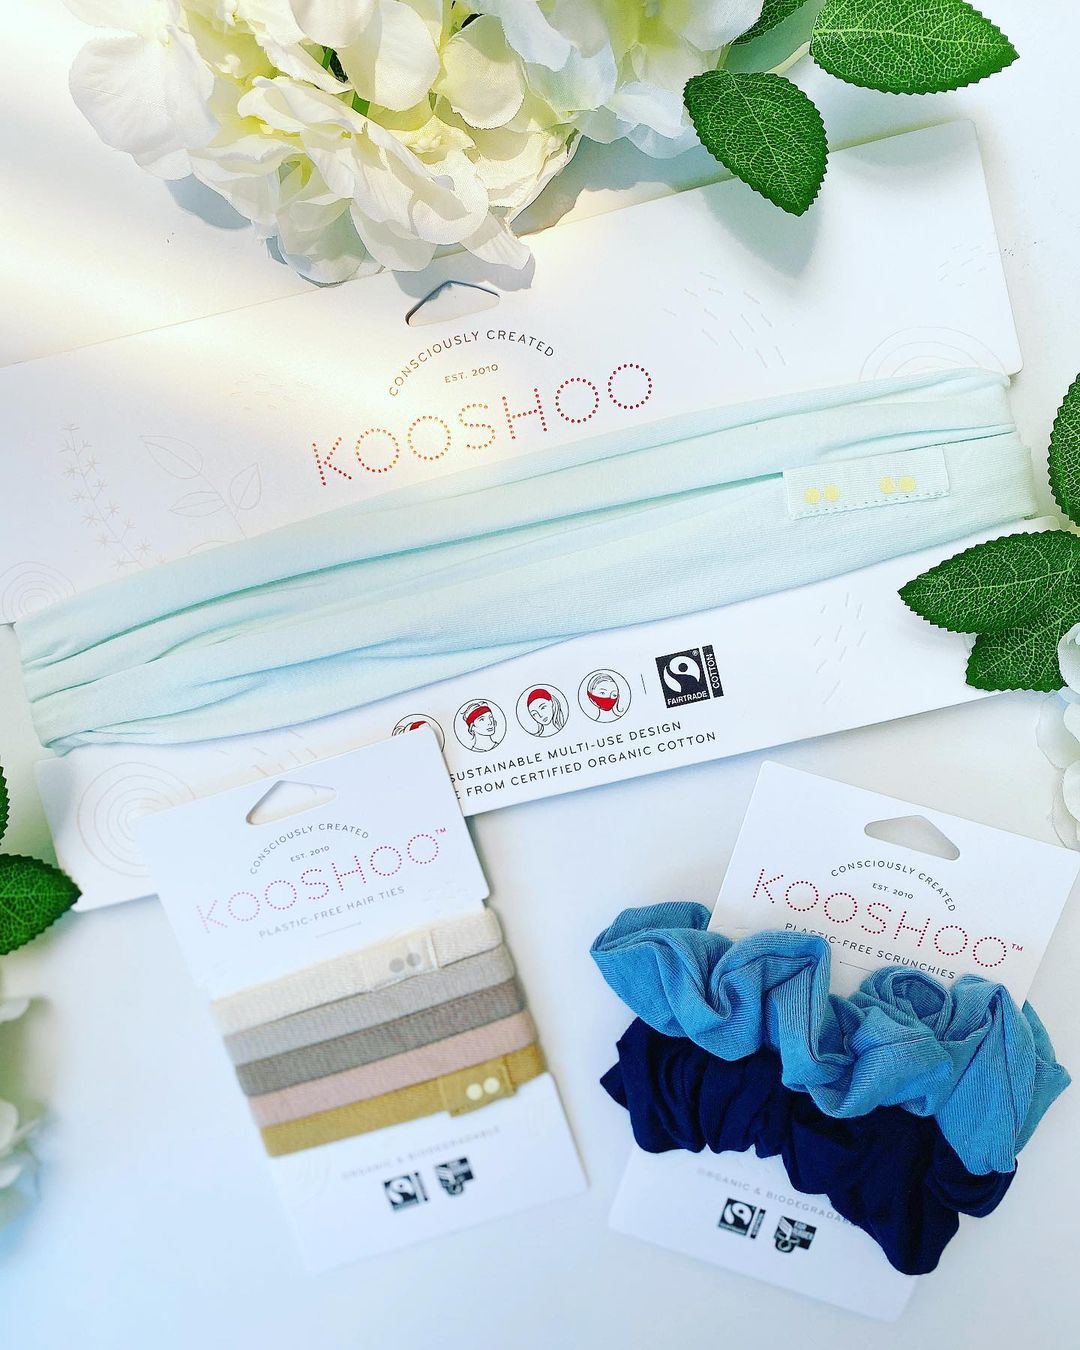 Kooshoo Certifed Organic Headband review and promo code